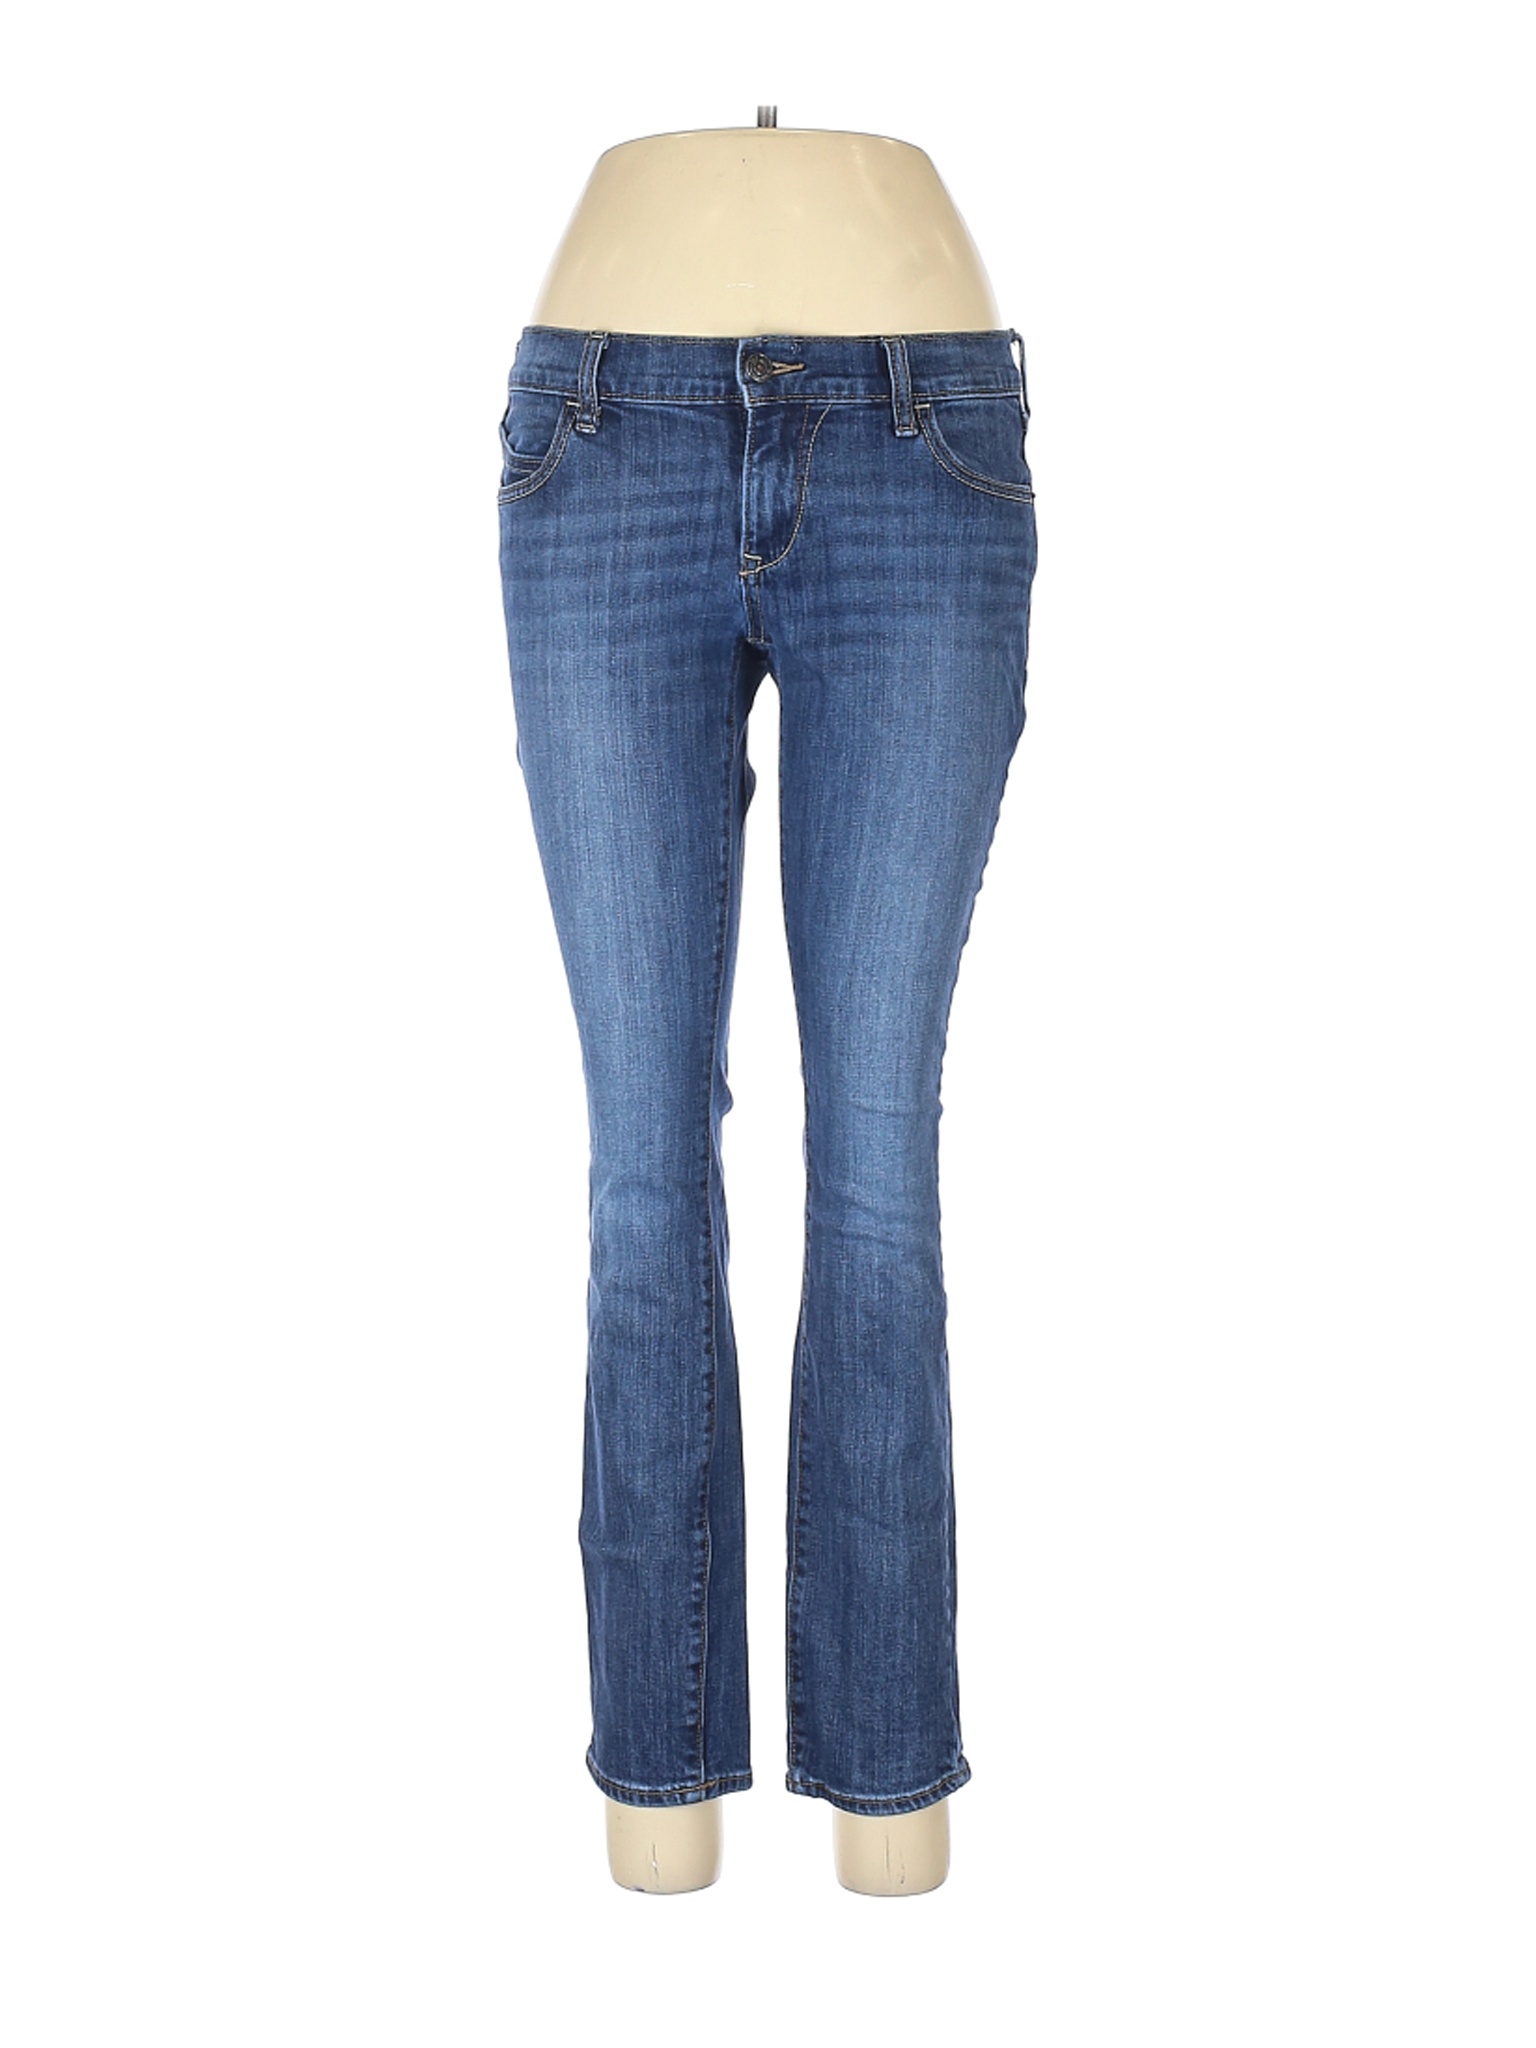 Diva Women Blue Jeans 6 | eBay